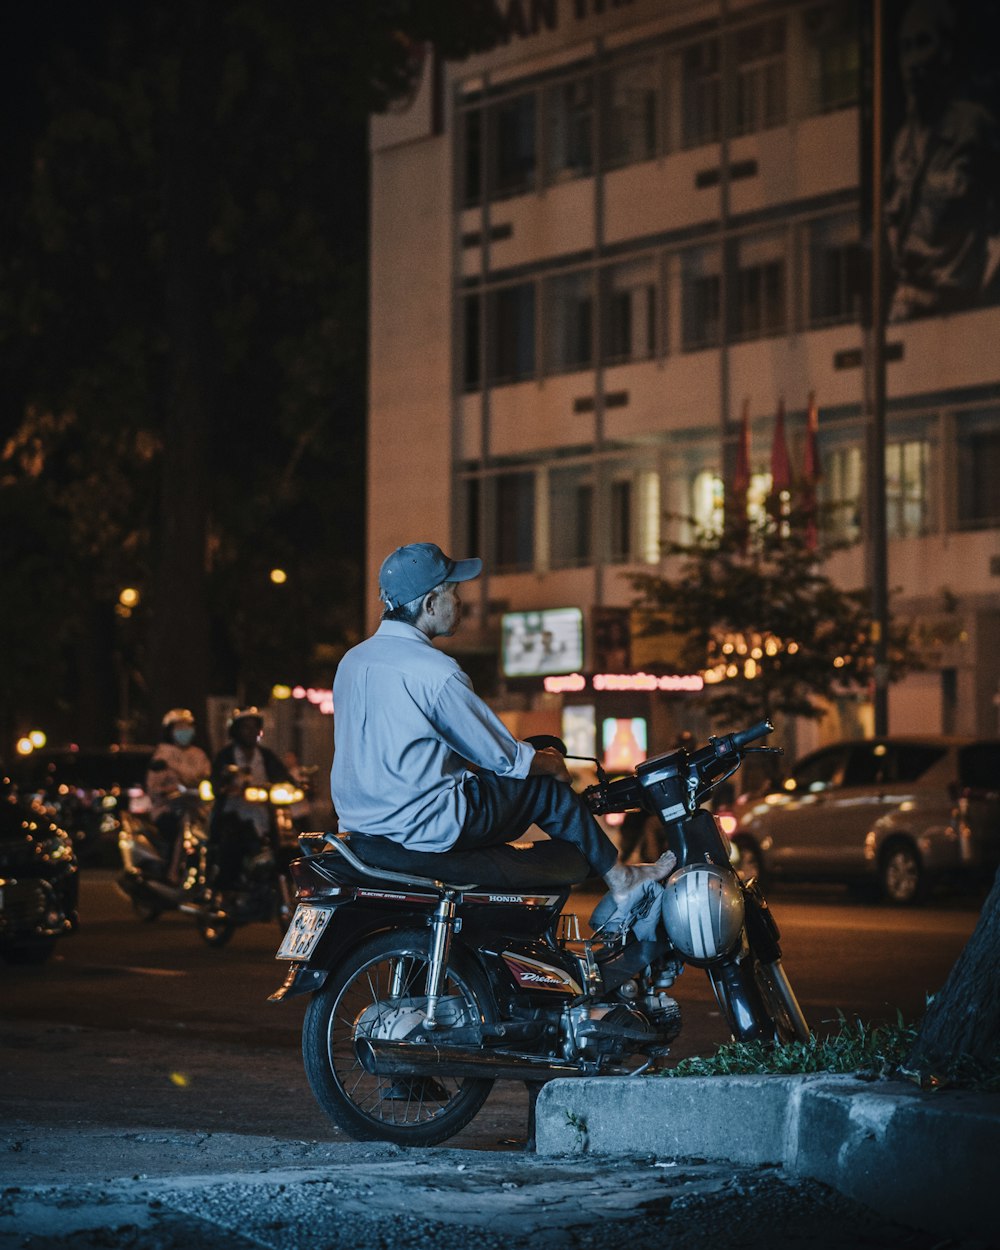 man in white jacket riding on motorcycle during night time